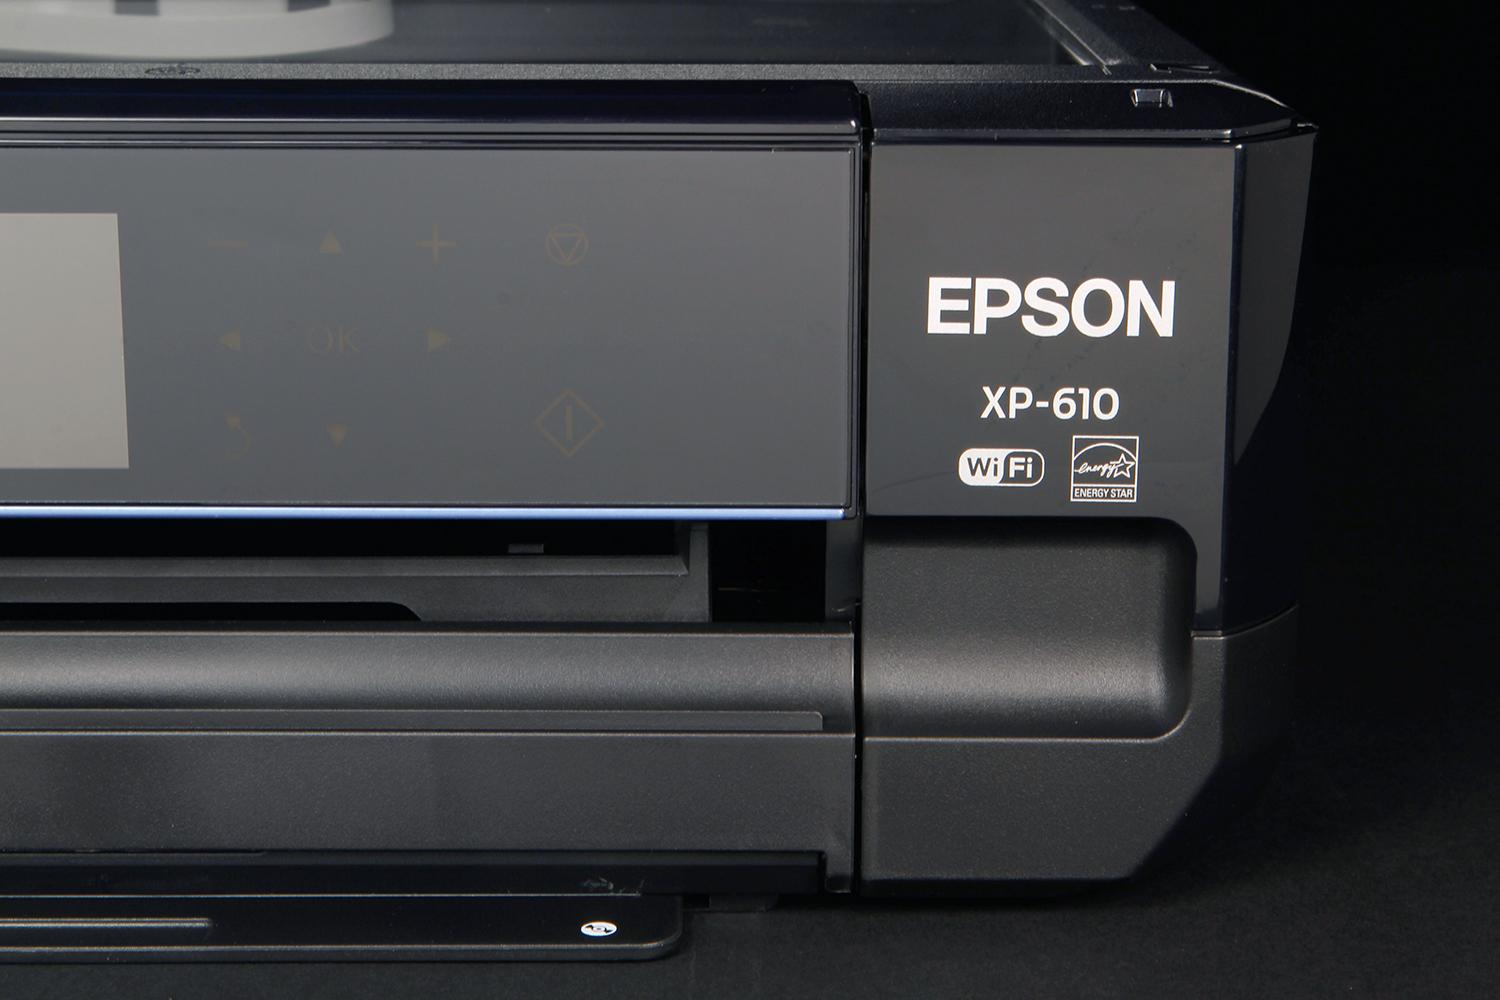 Buy Epson Expression XP-6105 Wireless Inkjet Printer